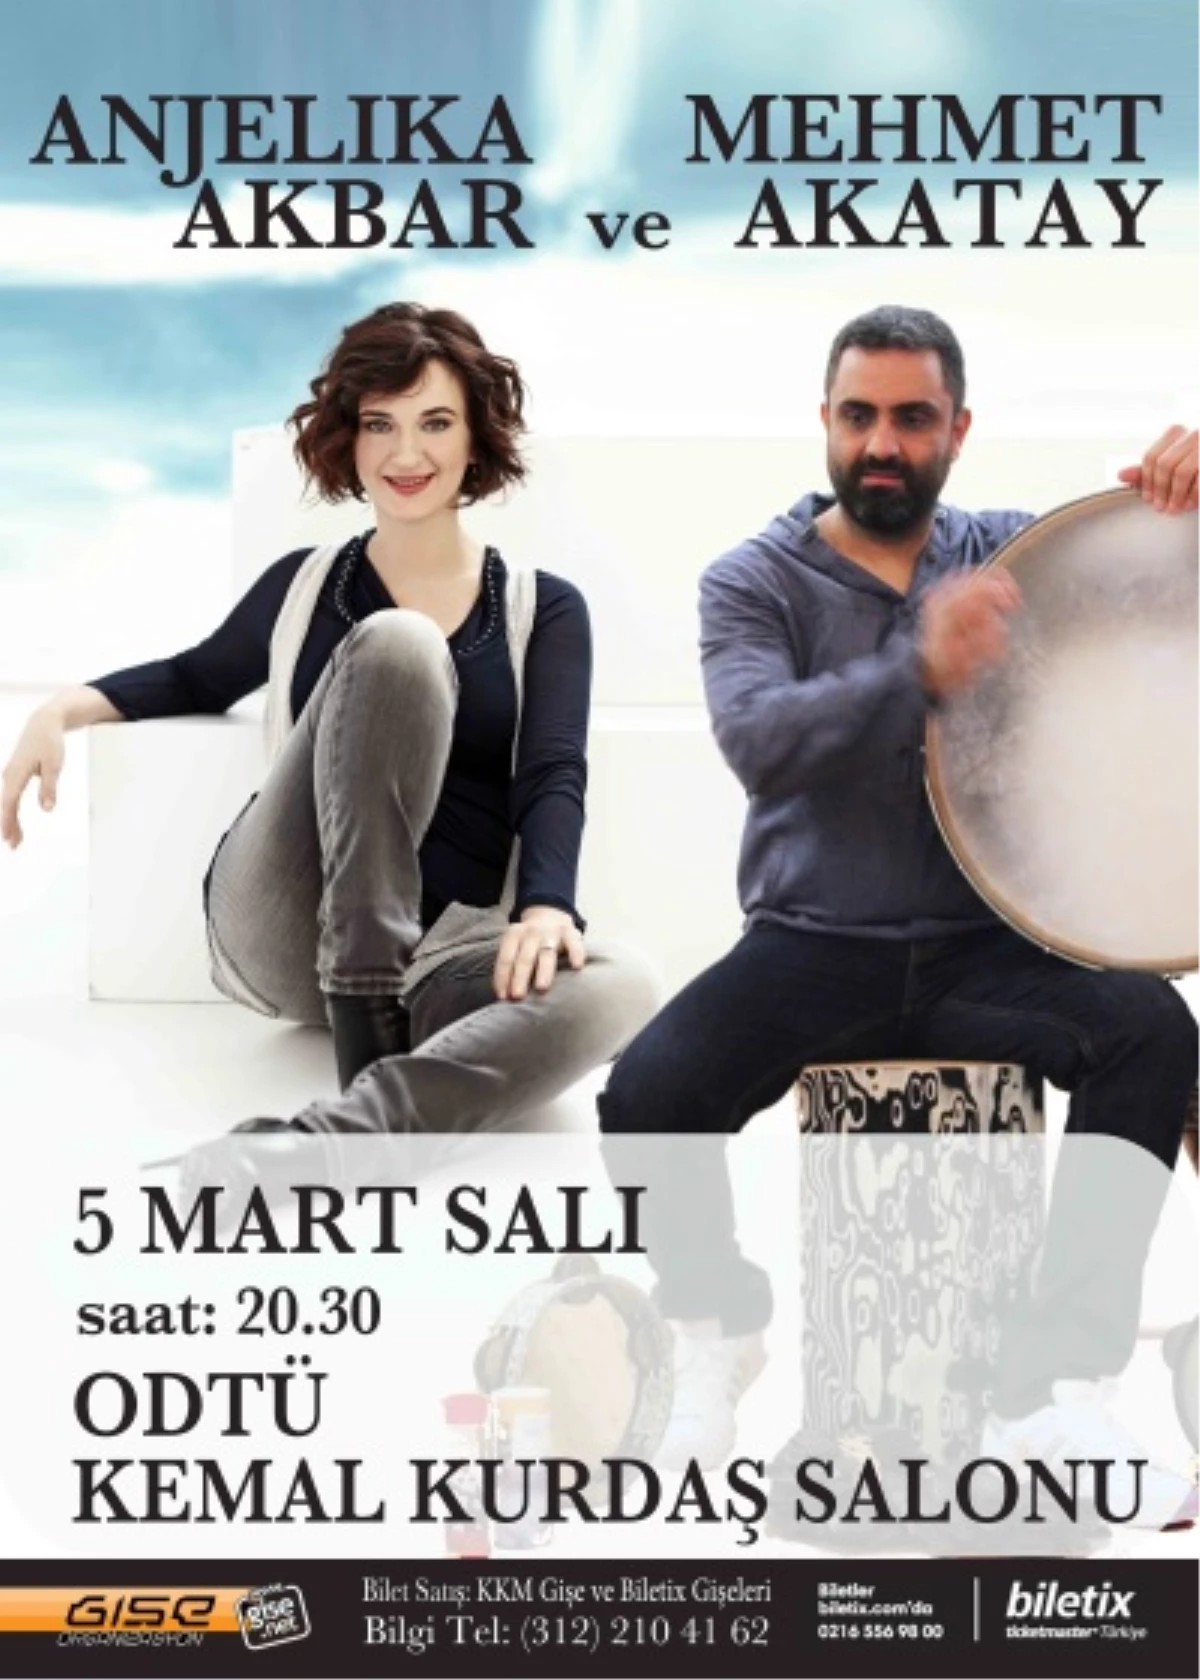 Anjelika Akbar – Mehmet Akatay Konseri